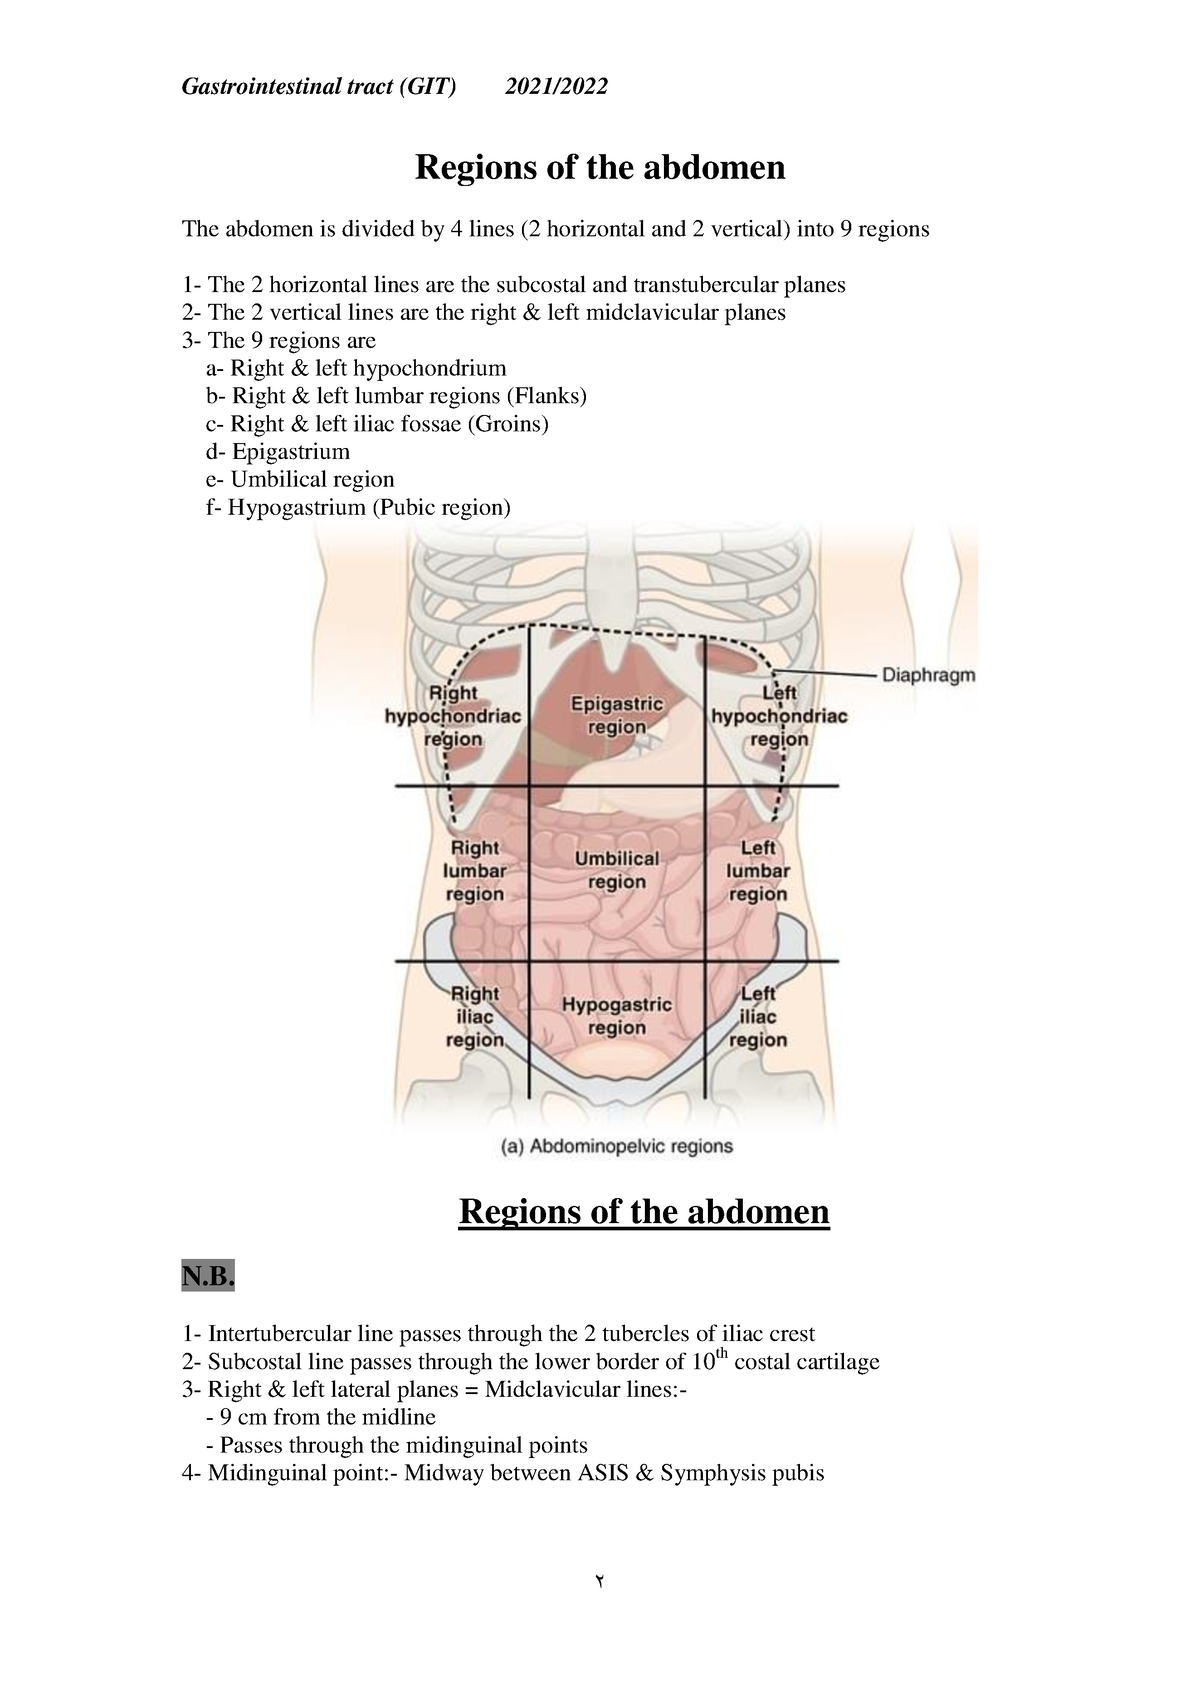 GIT anatomy-Abdomen - Abdominal GIT anatomy and its clinically ...